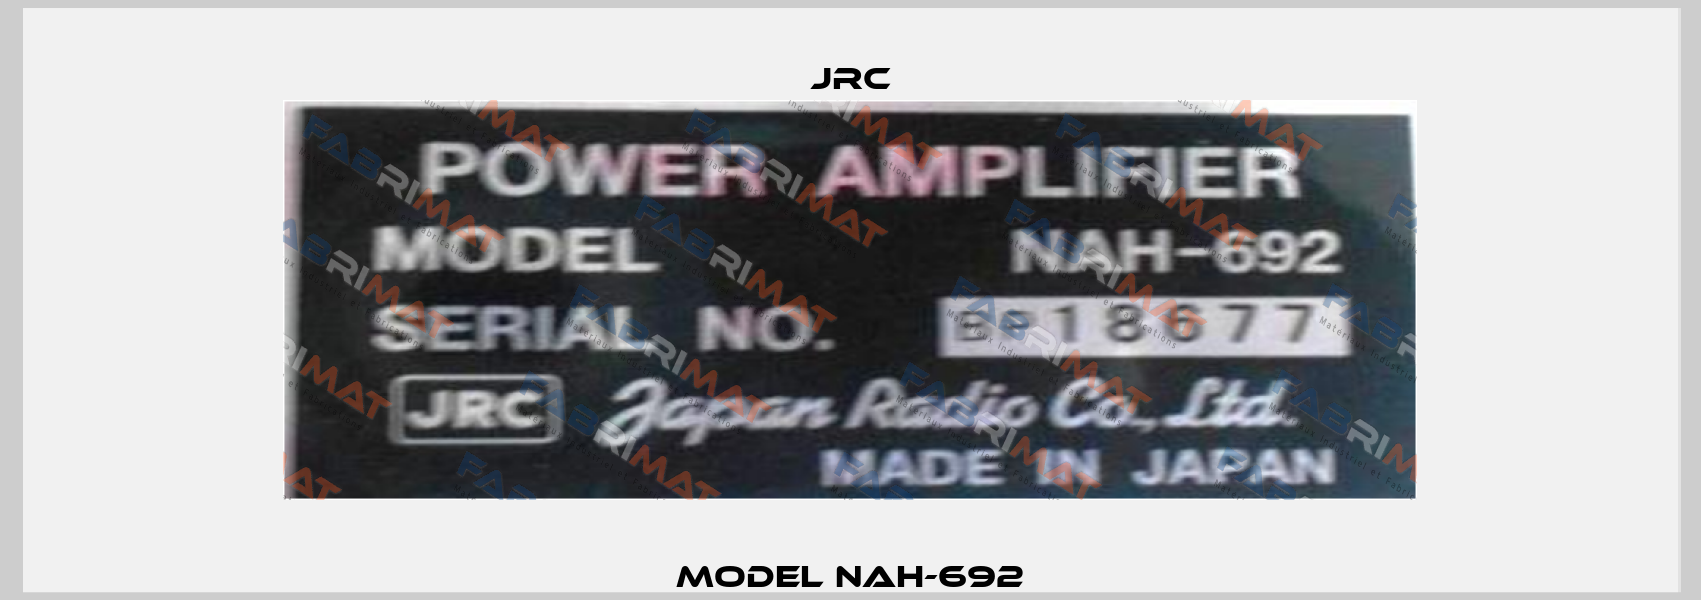 Model NAH-692 Jrc